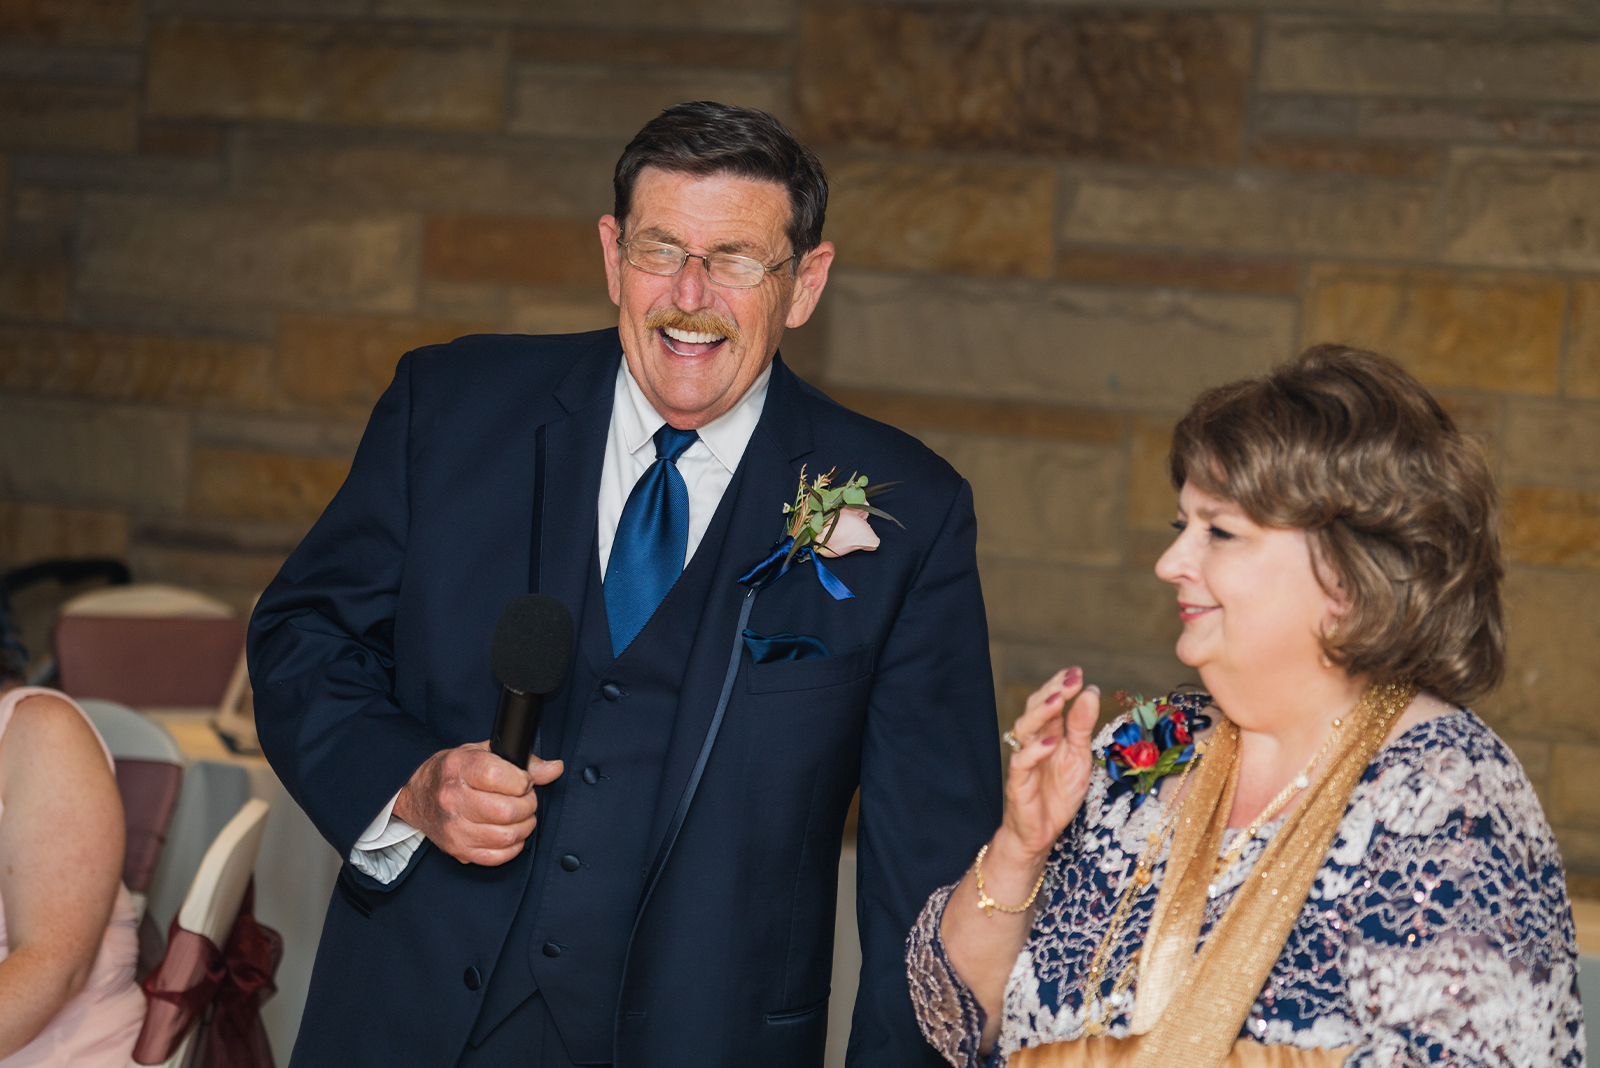 Wedding toast, wedding speech, smile, laugh, funny, candid wedding photo, September wedding reception at Punderson Manor Lodge & Conference Center, Newbury Township OH